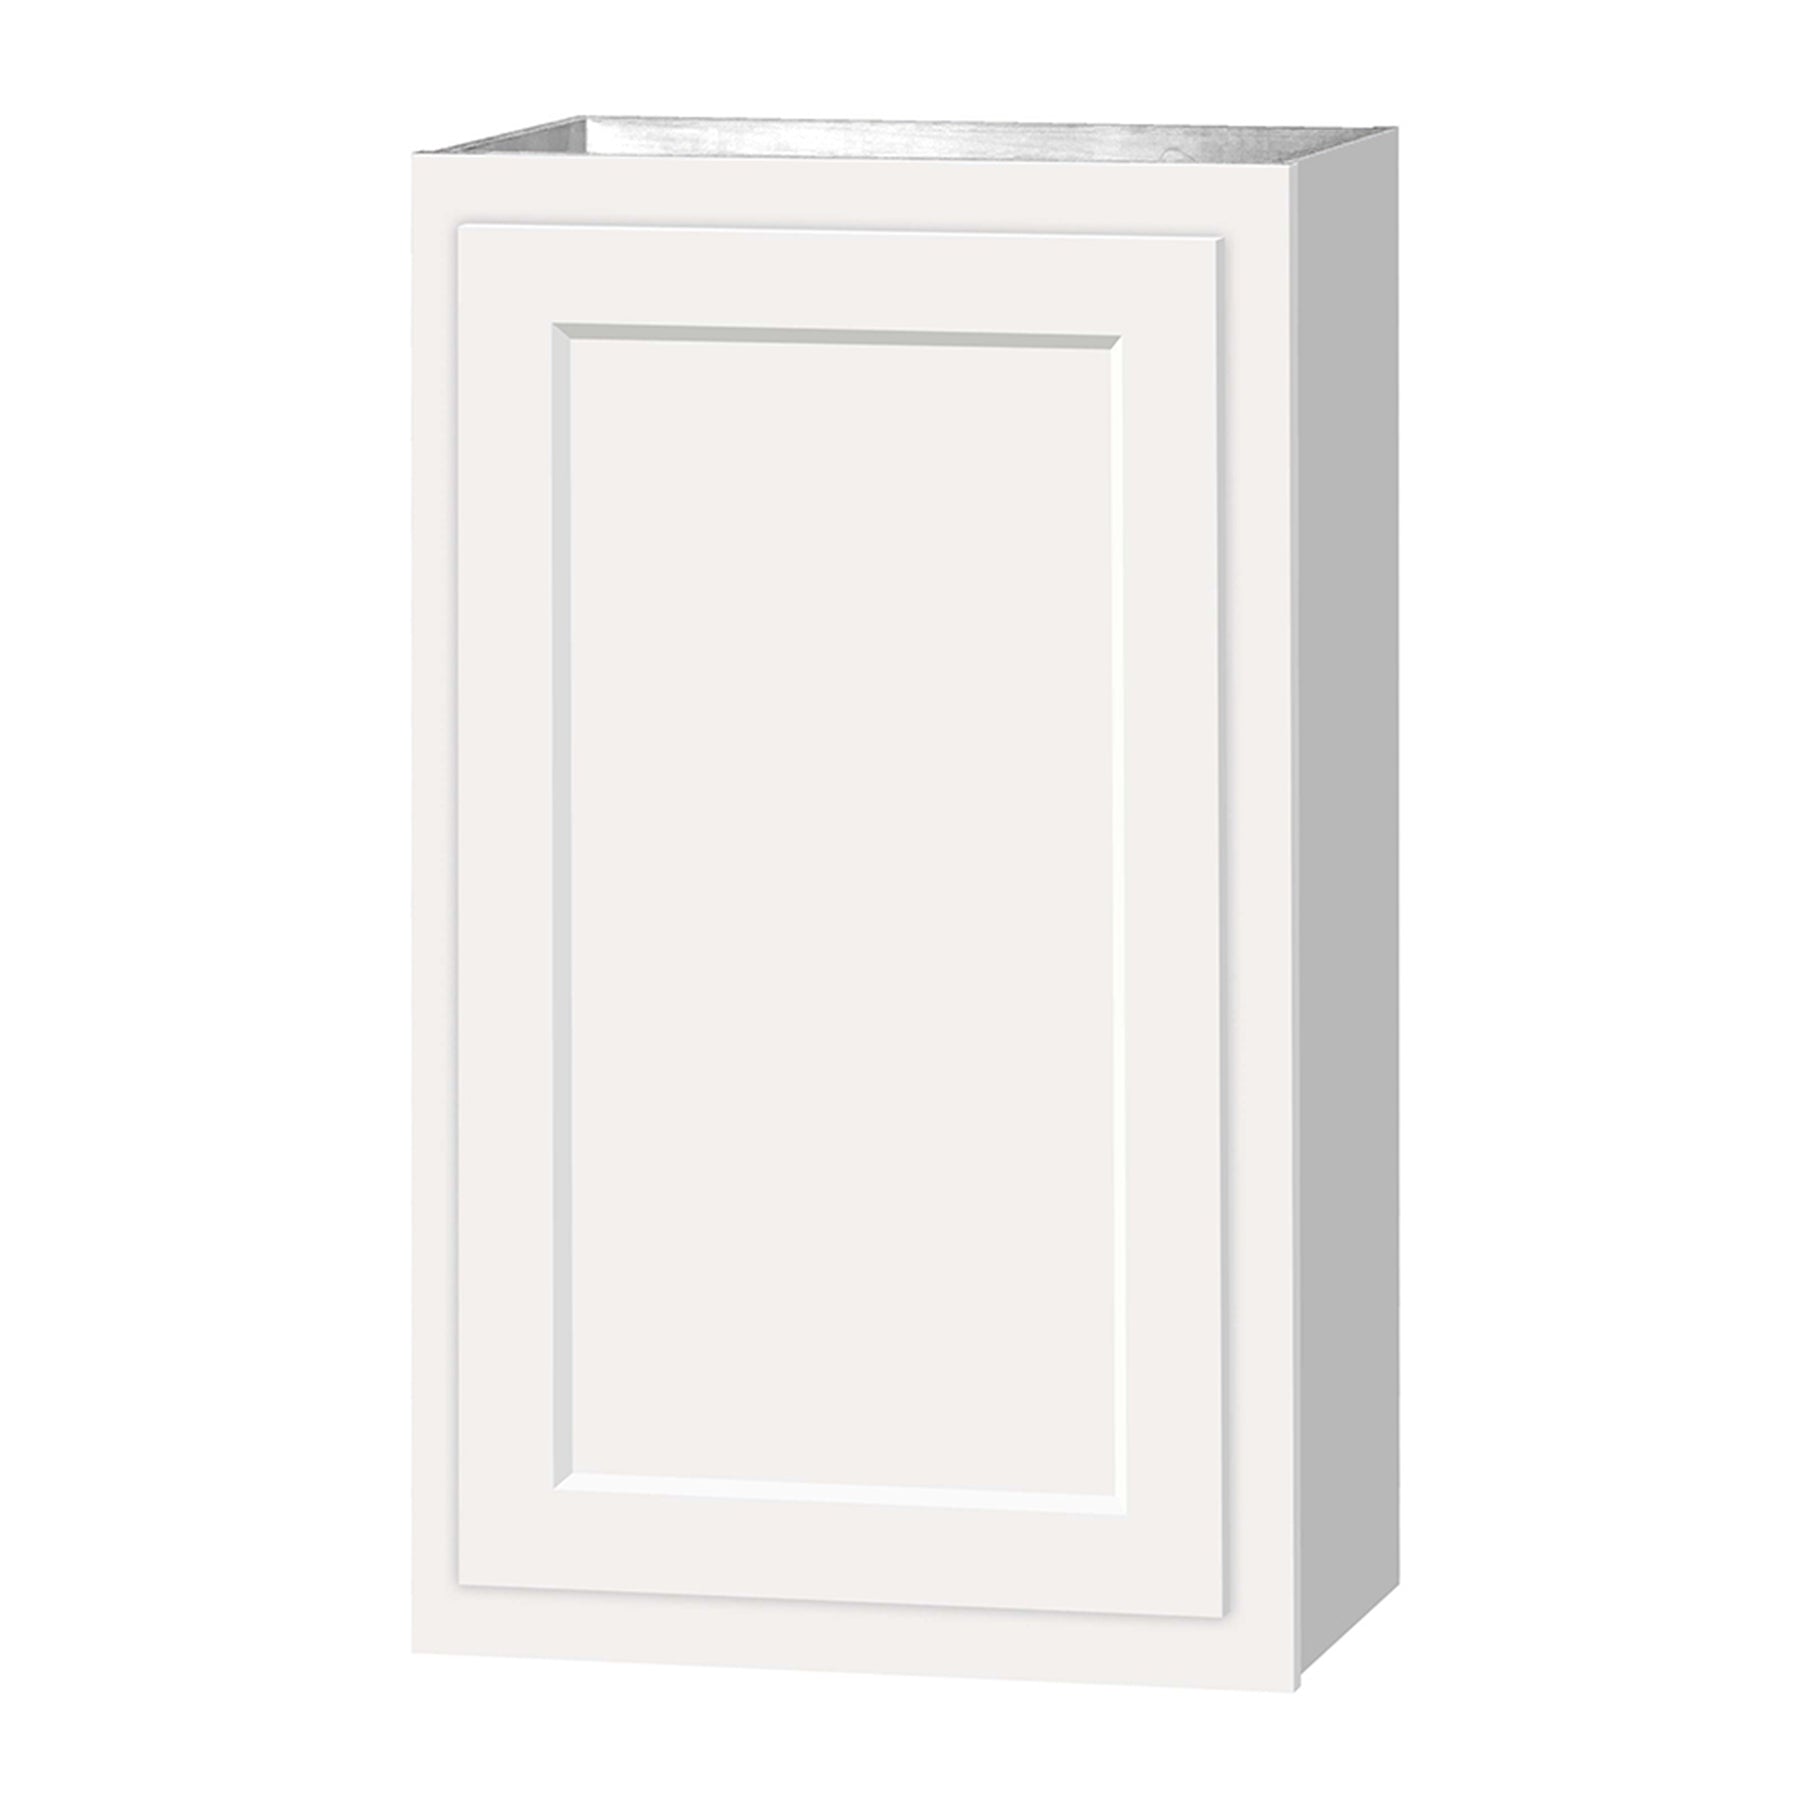 30 inch Wall Cabinets - Single Door - Dwhite Shaker - 18 Inch W x 30 Inch H x 12 Inch D